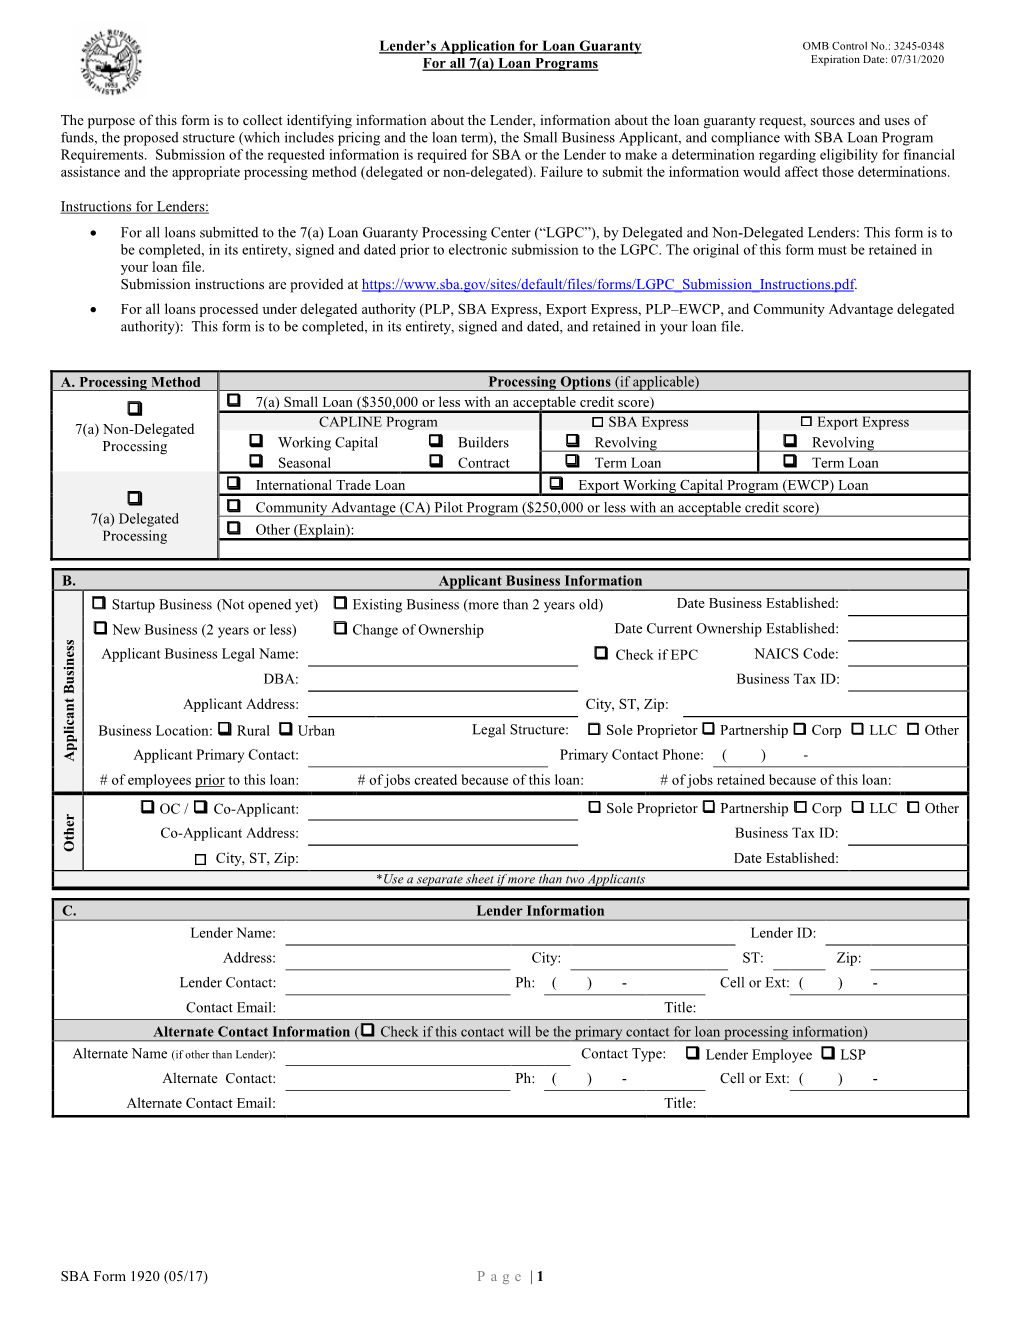 SBA Form 1920 Lender's Application for Loan Guaranty